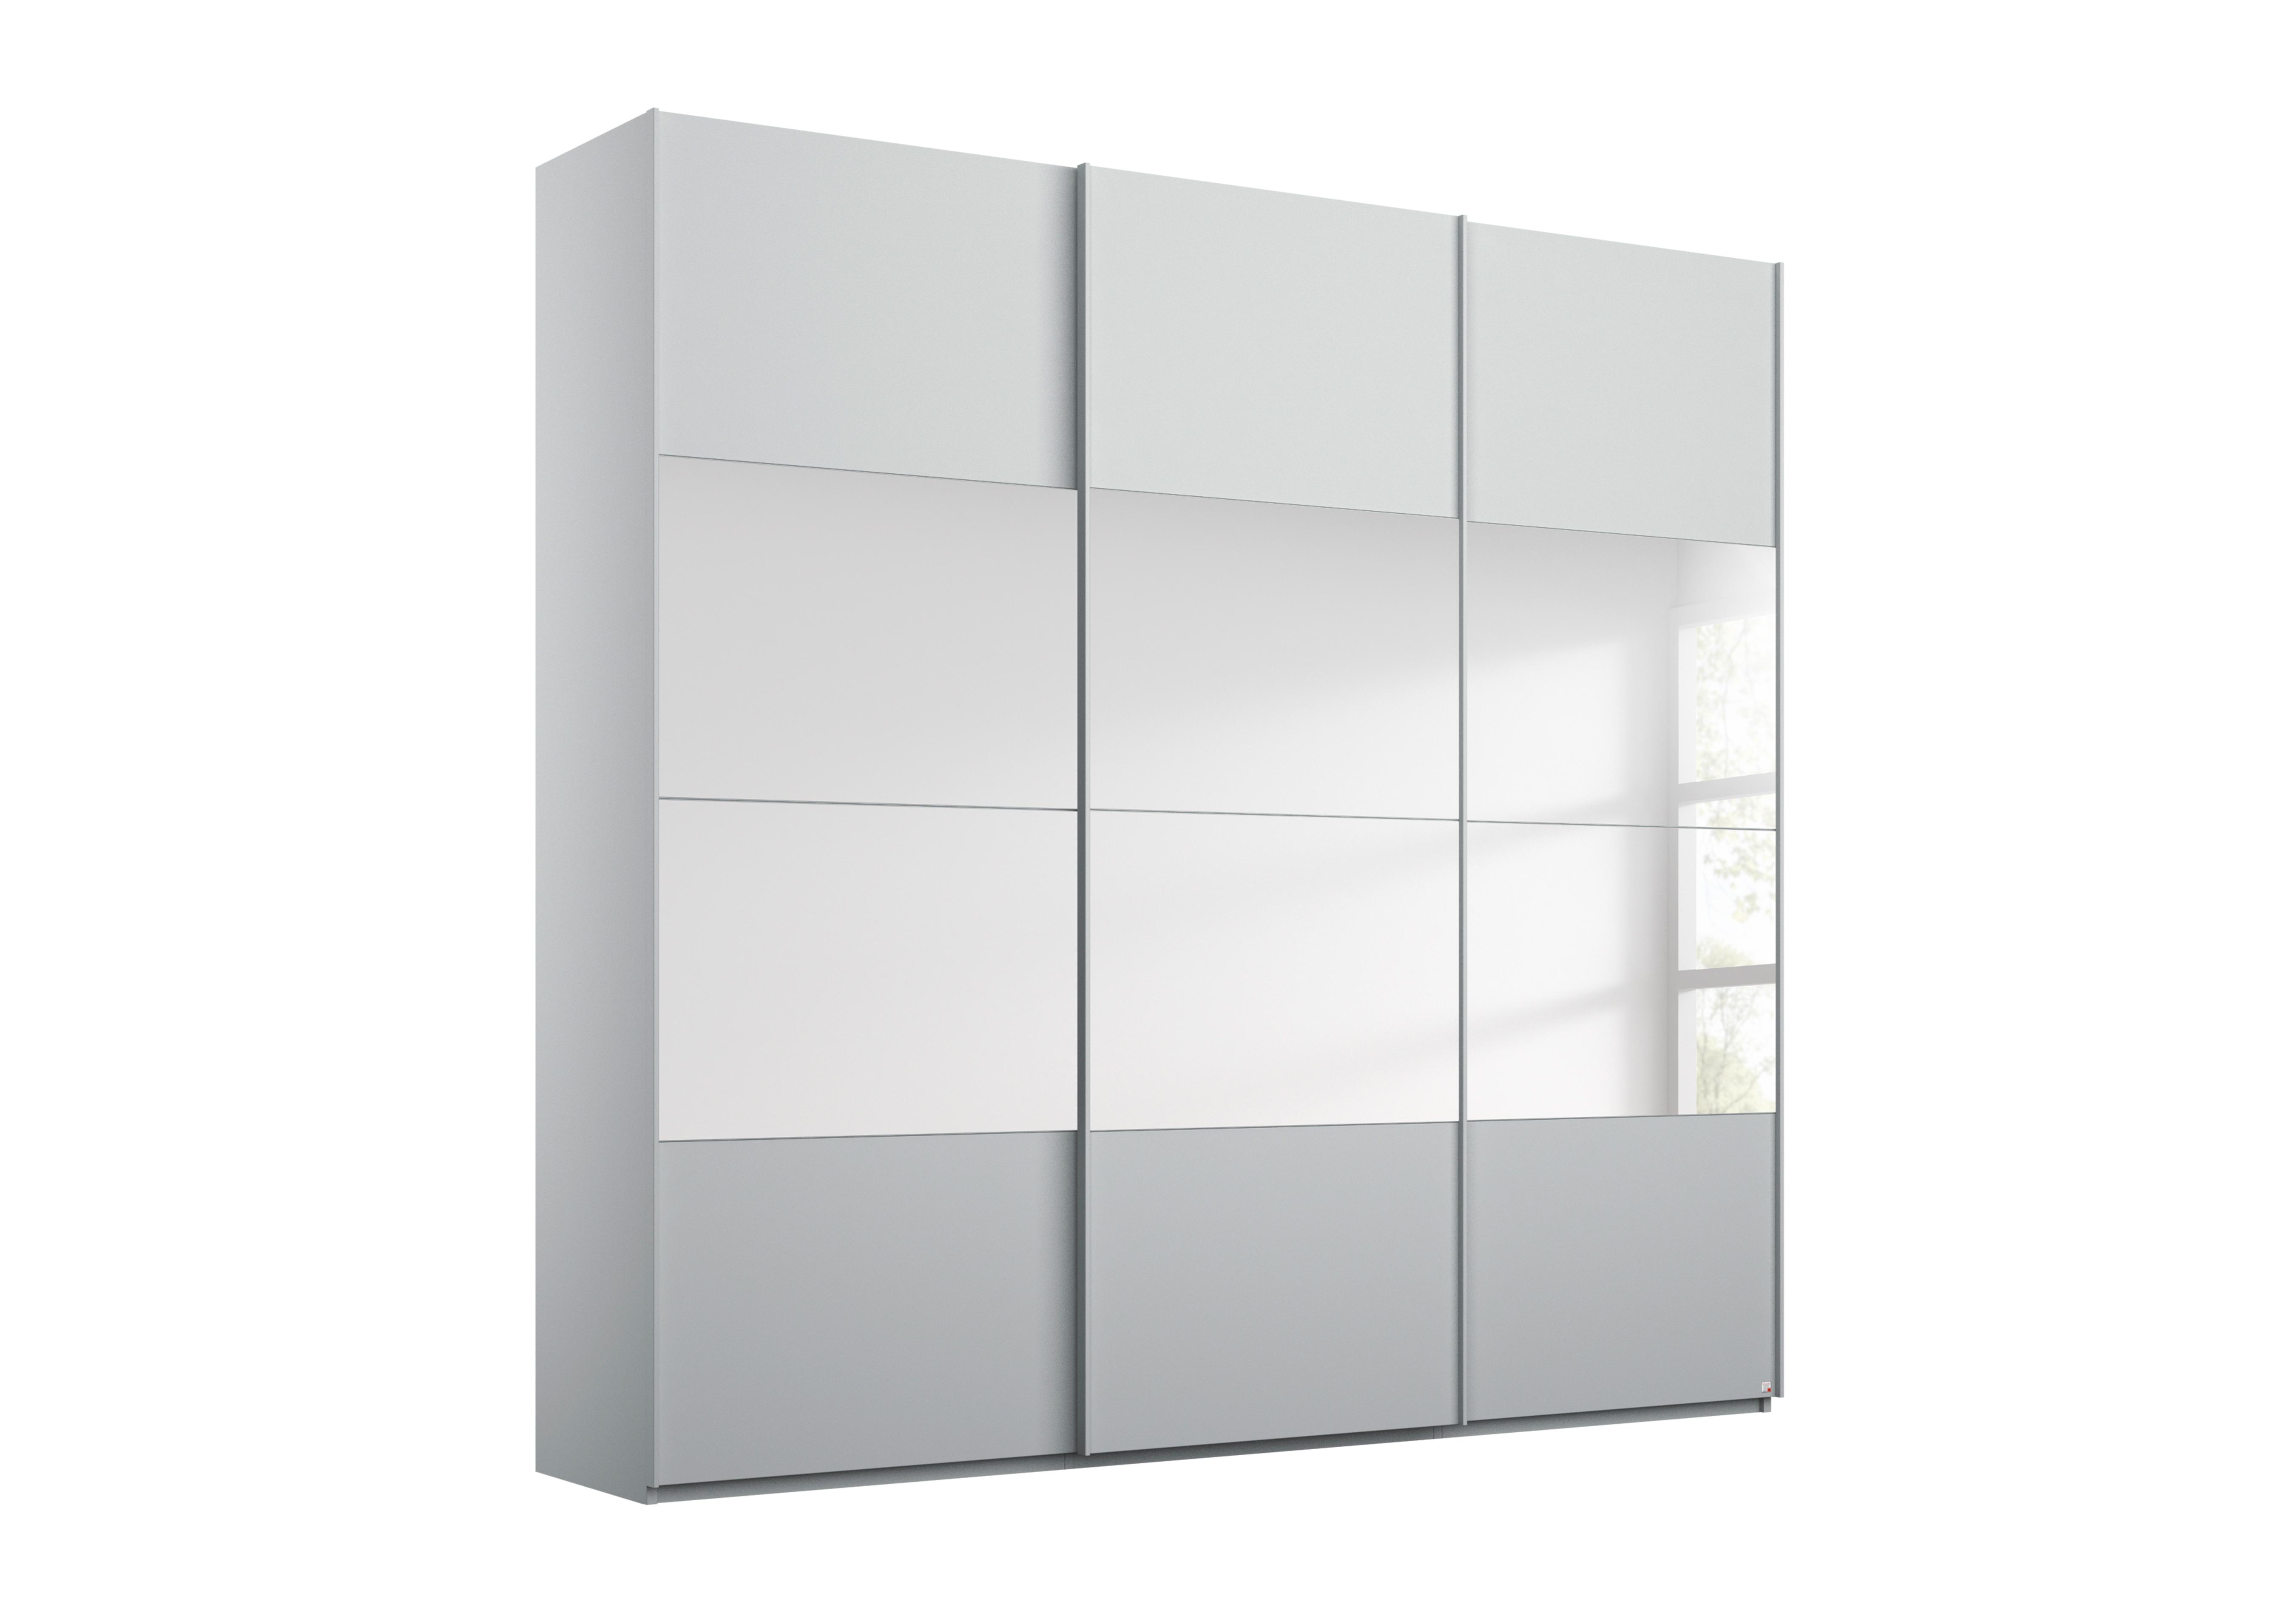 Formes Decor 3 Door Sliding Wardrobe with Horizontal Mirrors in A142b Silk Grey on Furniture Village